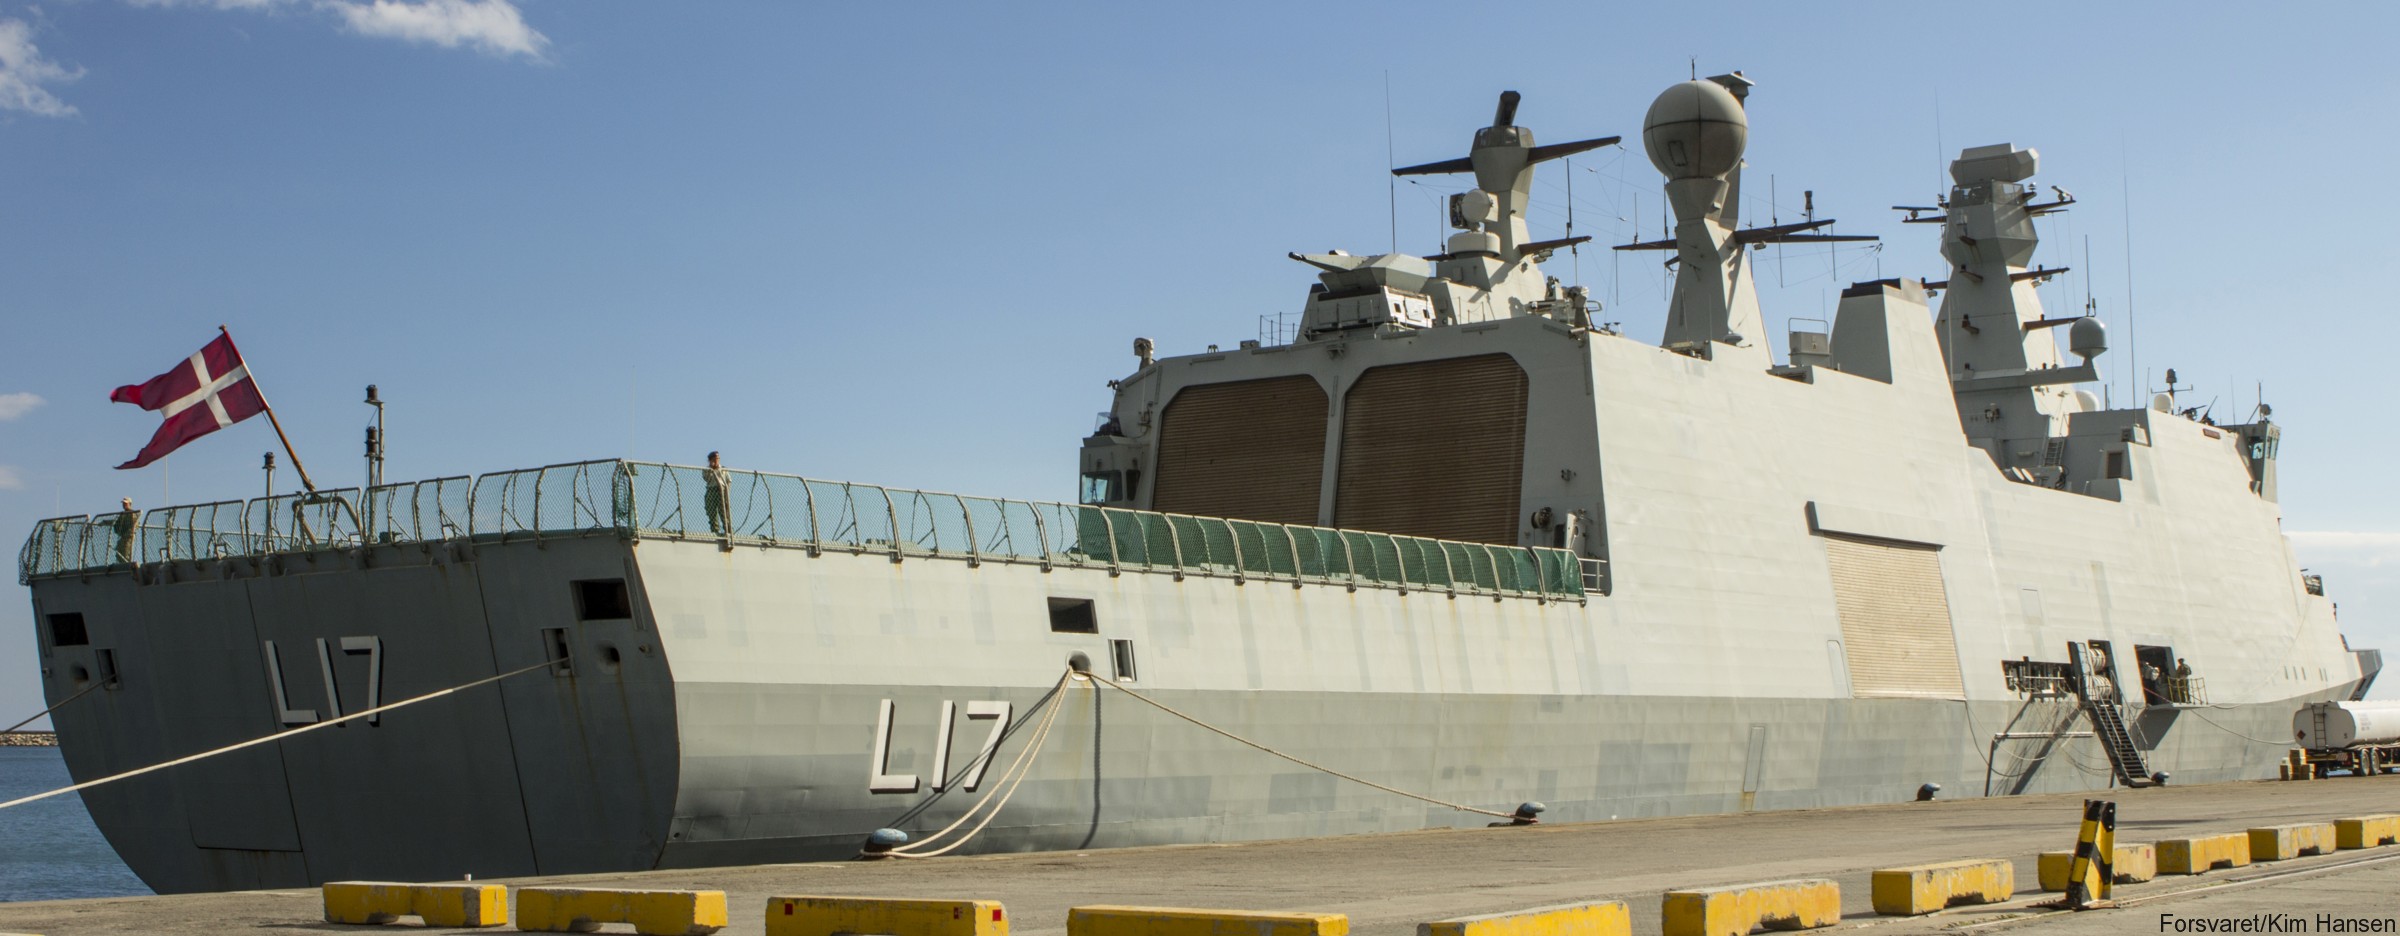 f-342 hdms esbern snare l-17 frigate command support ship royal danish navy 33